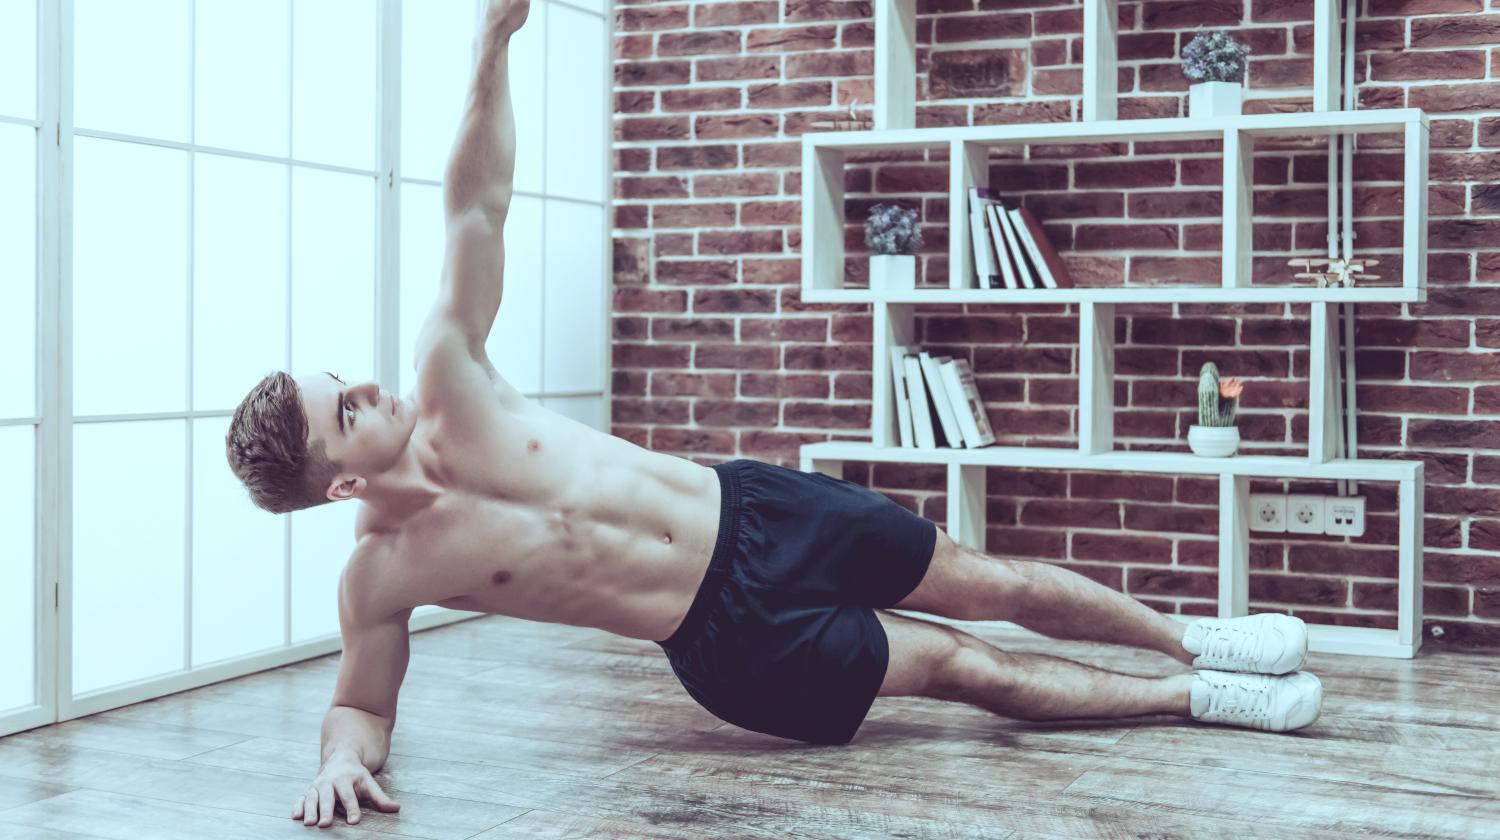 handsome-muscular-guy-bare-torso-full-body-exercises-ss-Feature.jpg